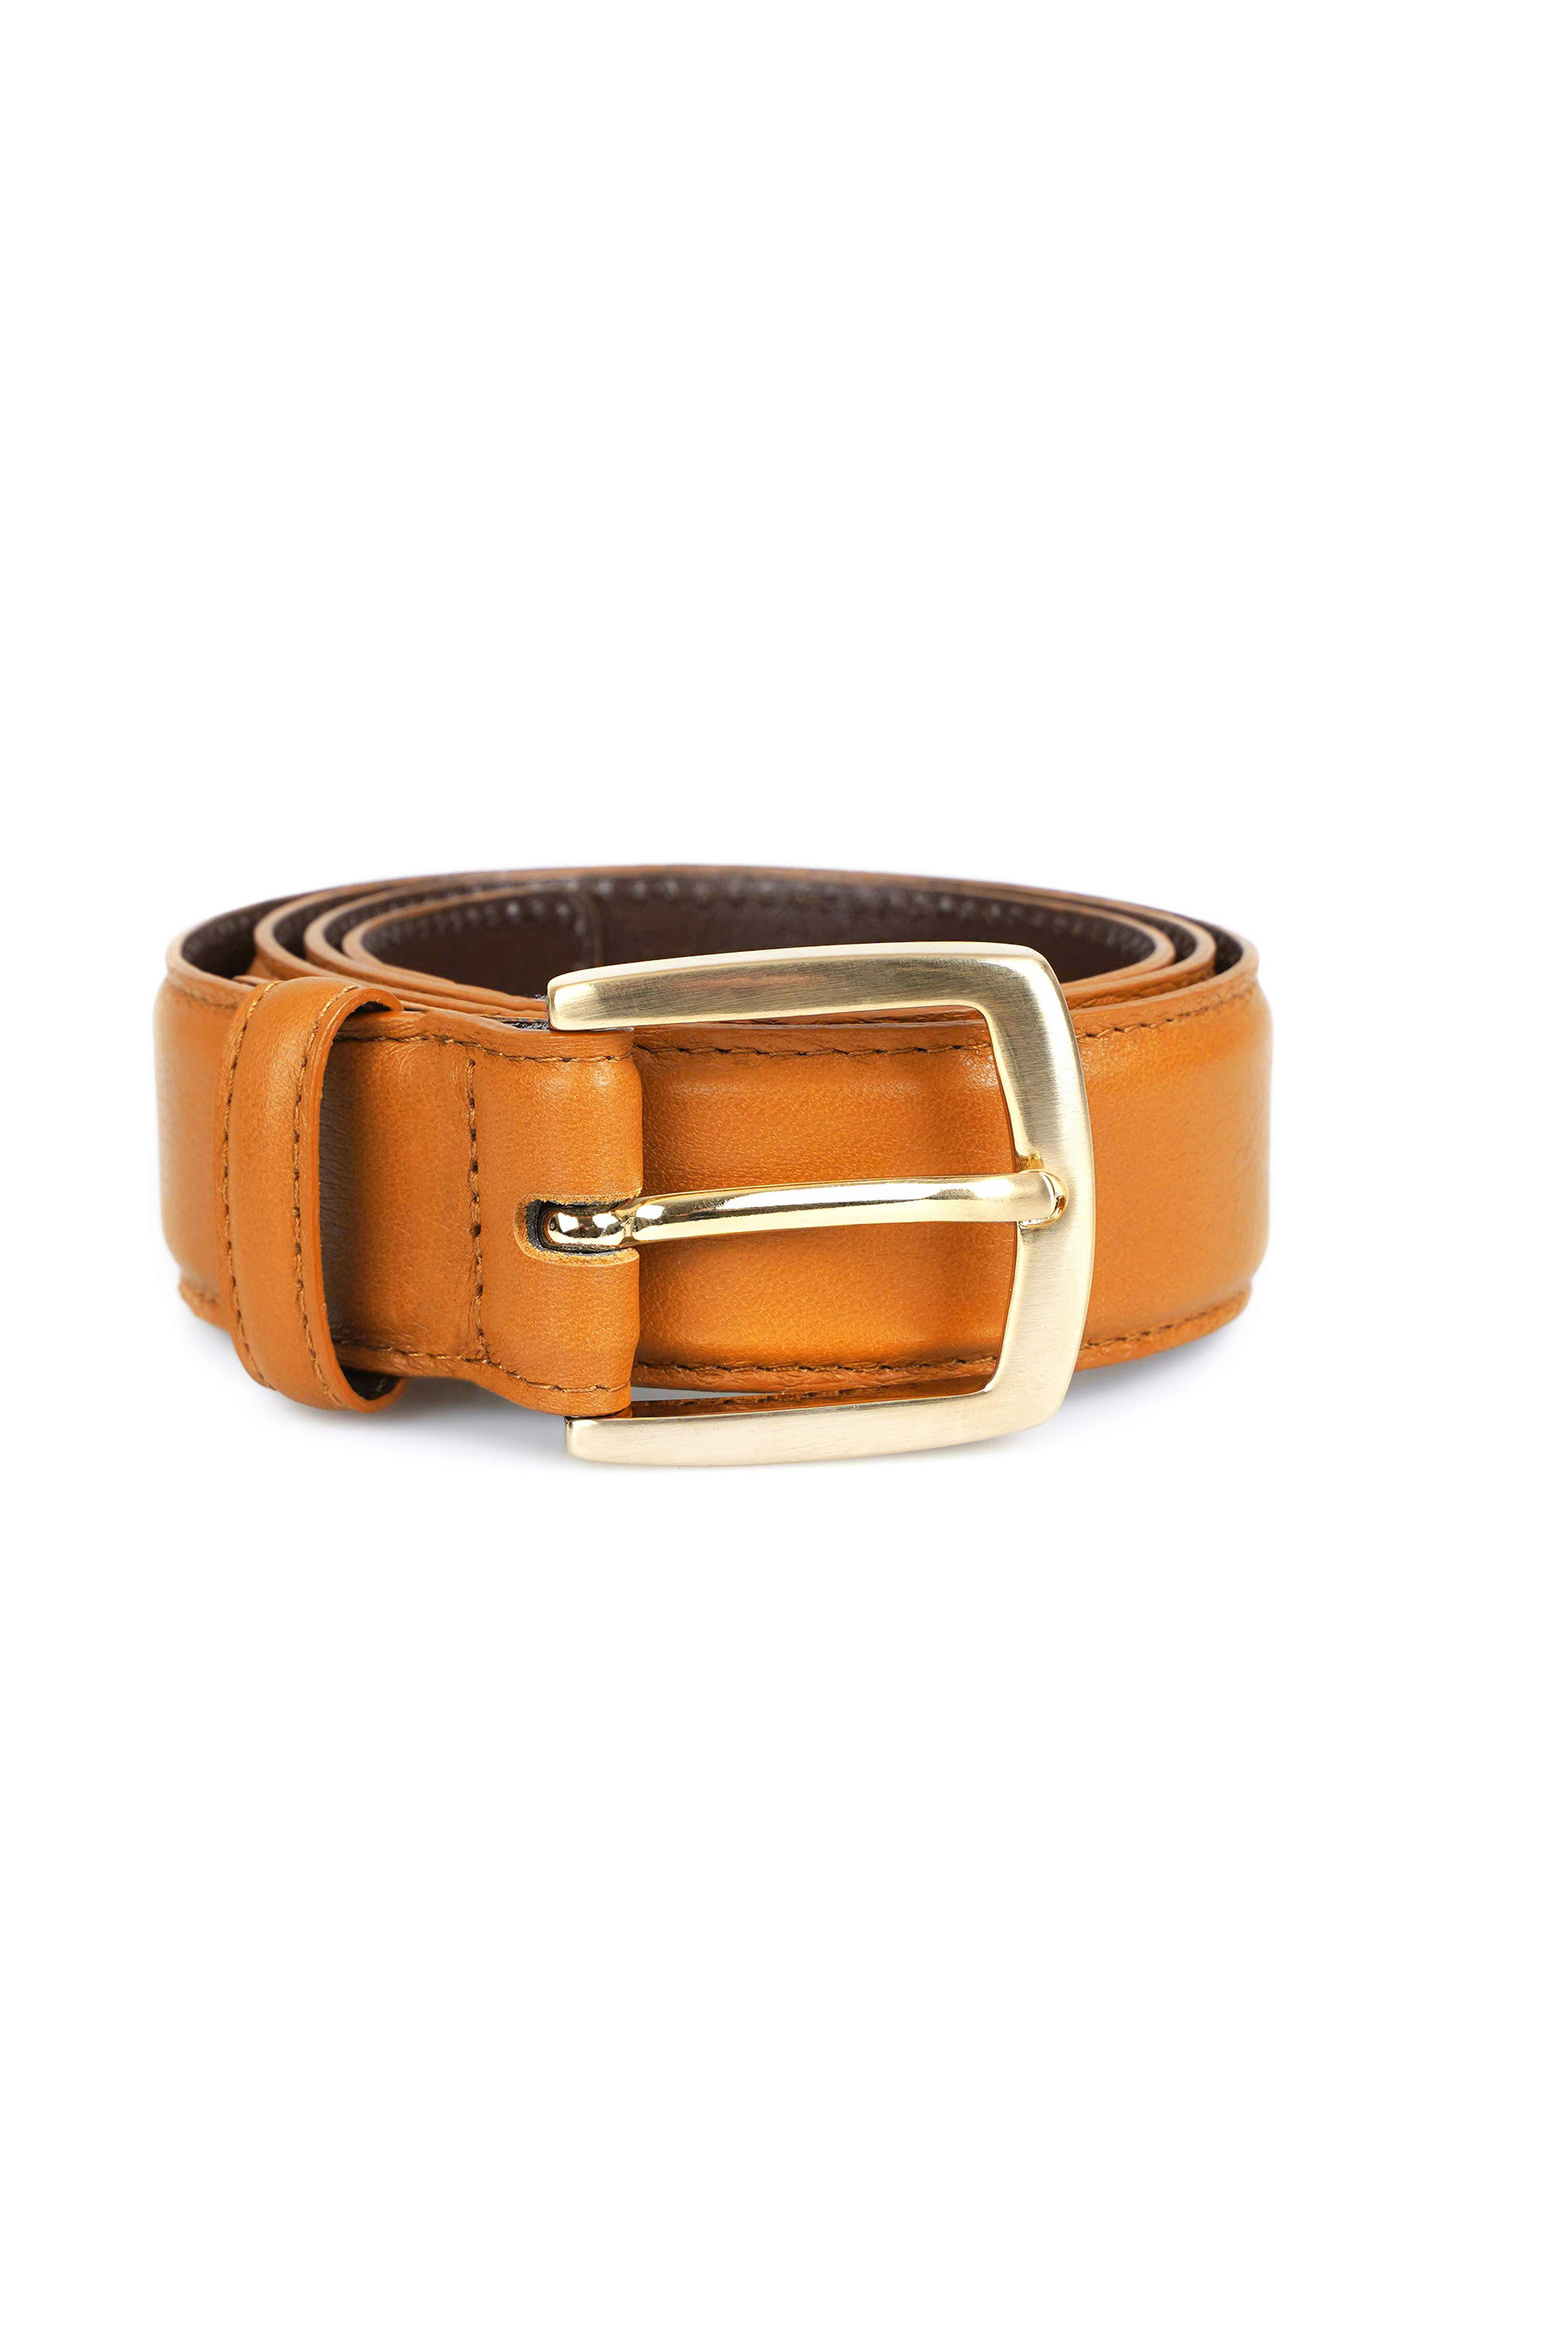 be150_classic-leather-belt_orange.jpg